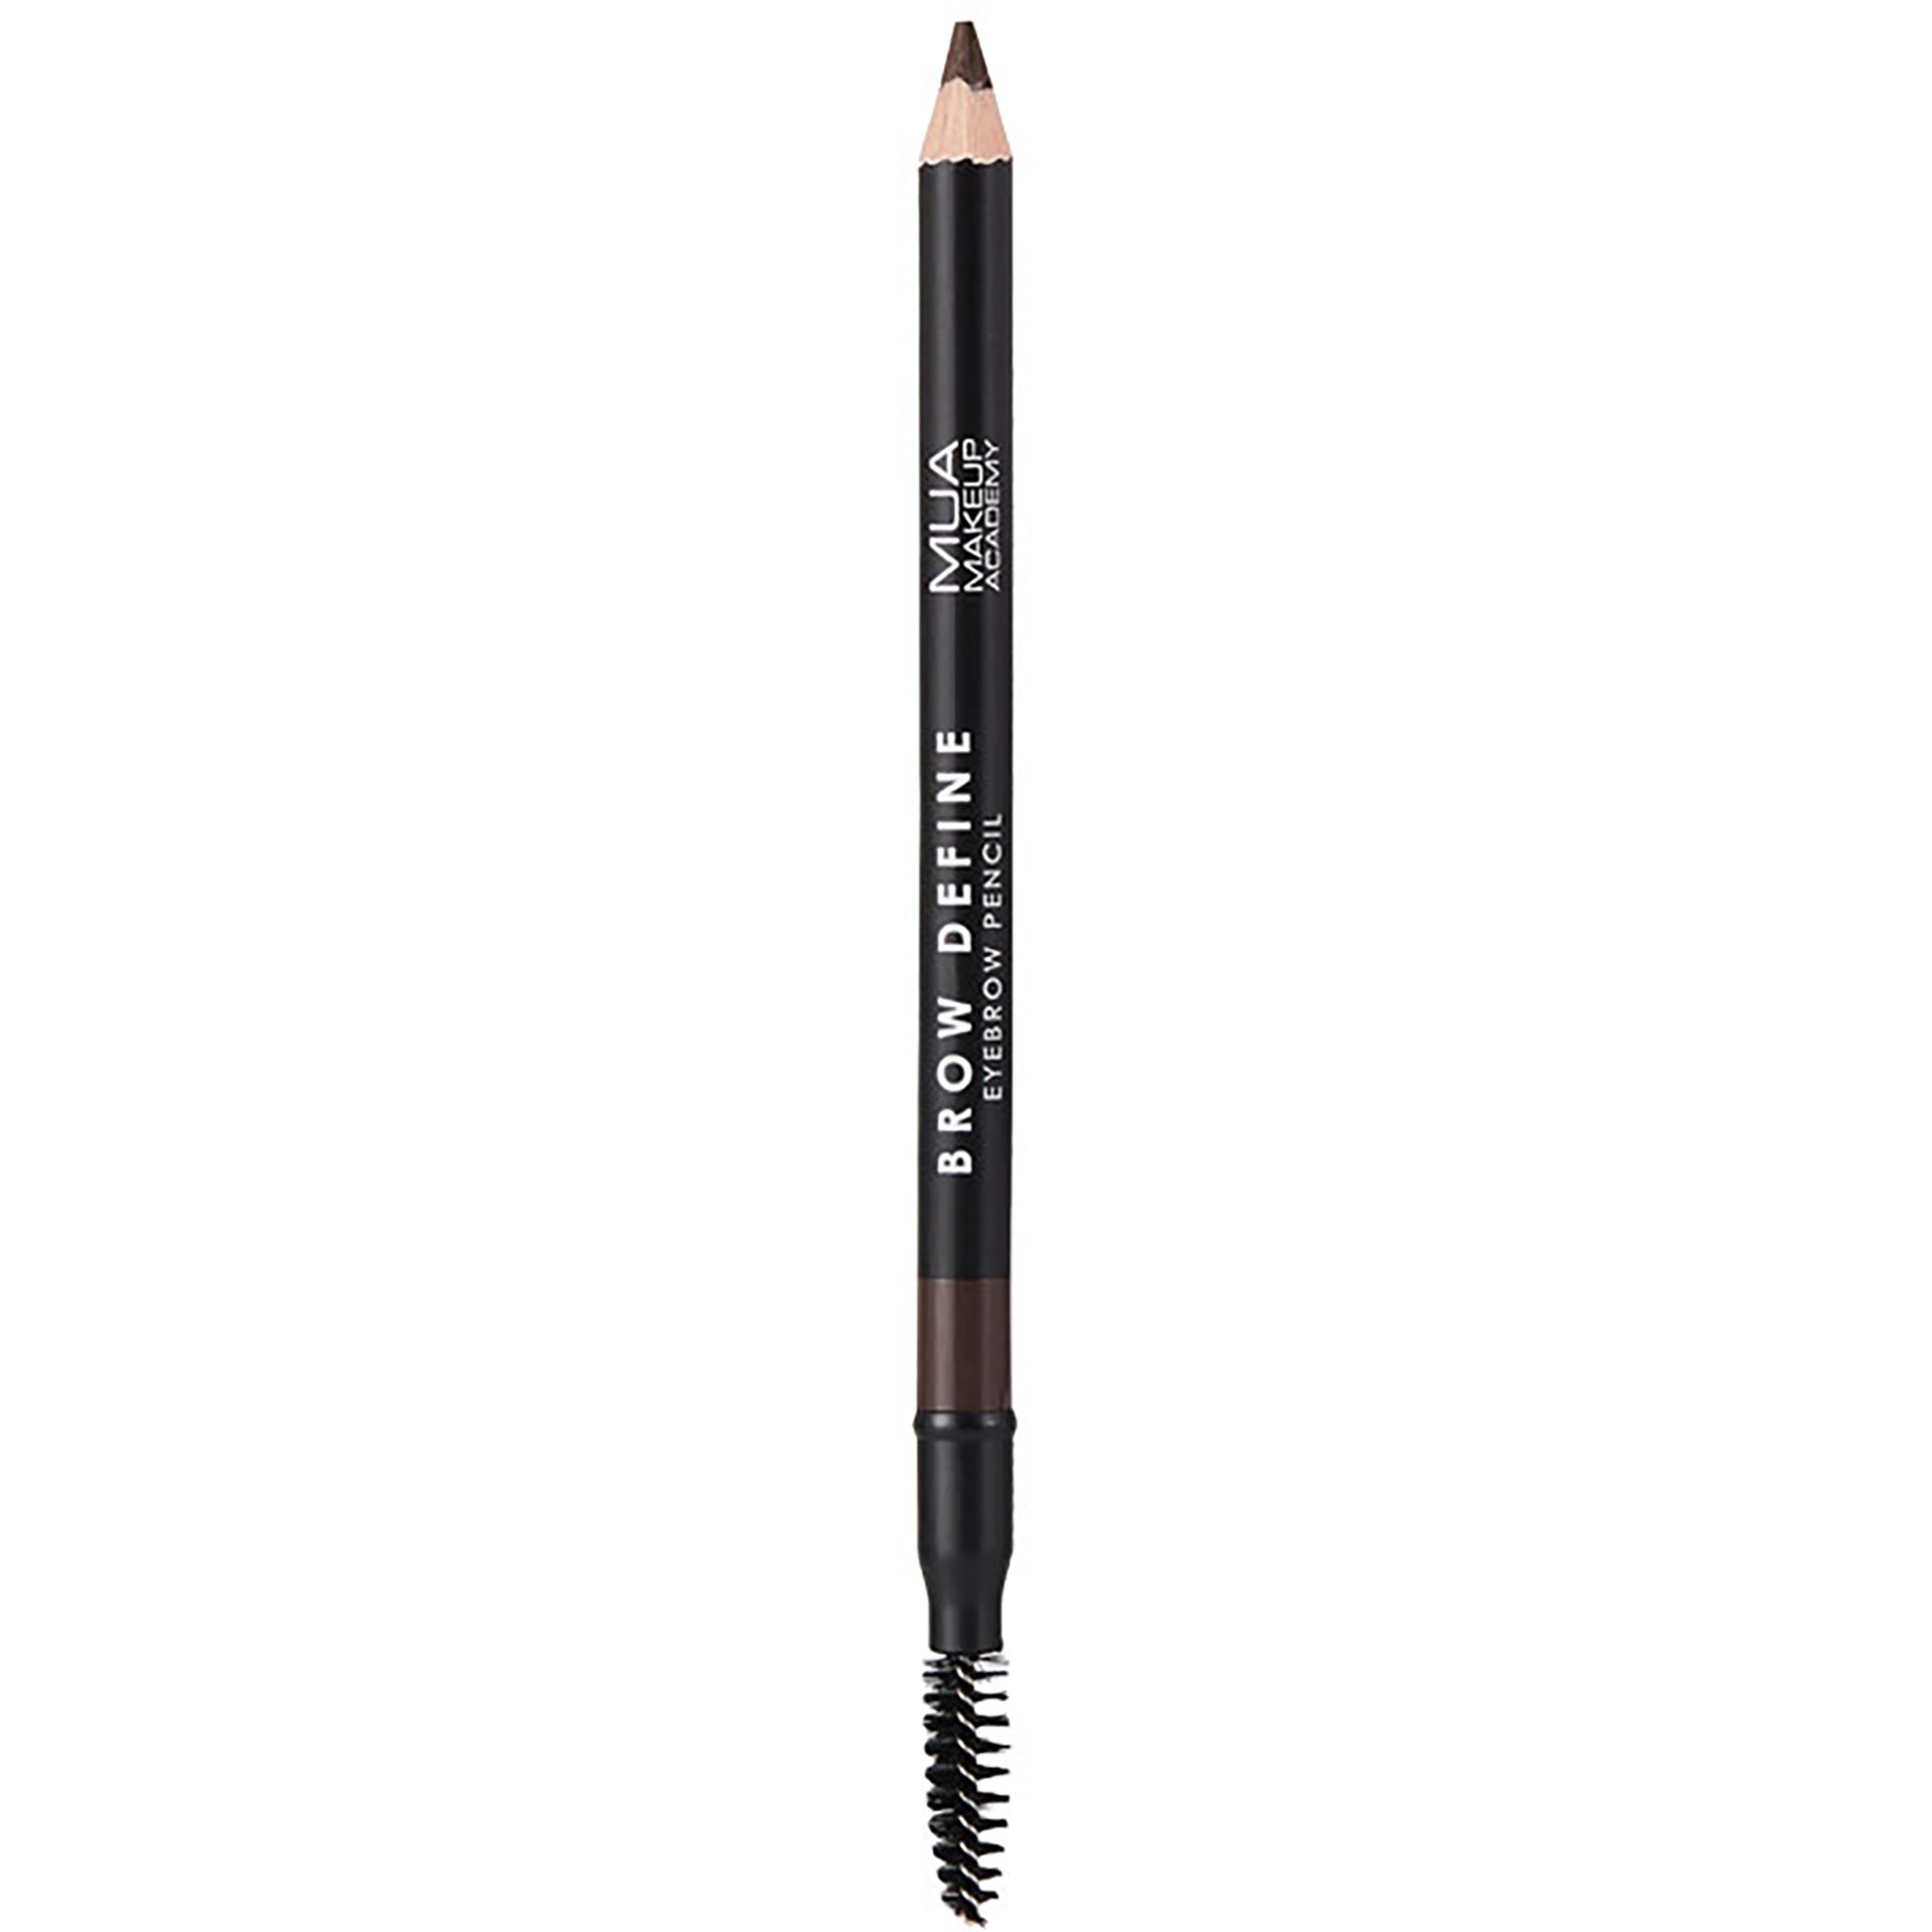 Makeup Academy Brow Define Eyebrow Pencil Dark Brown